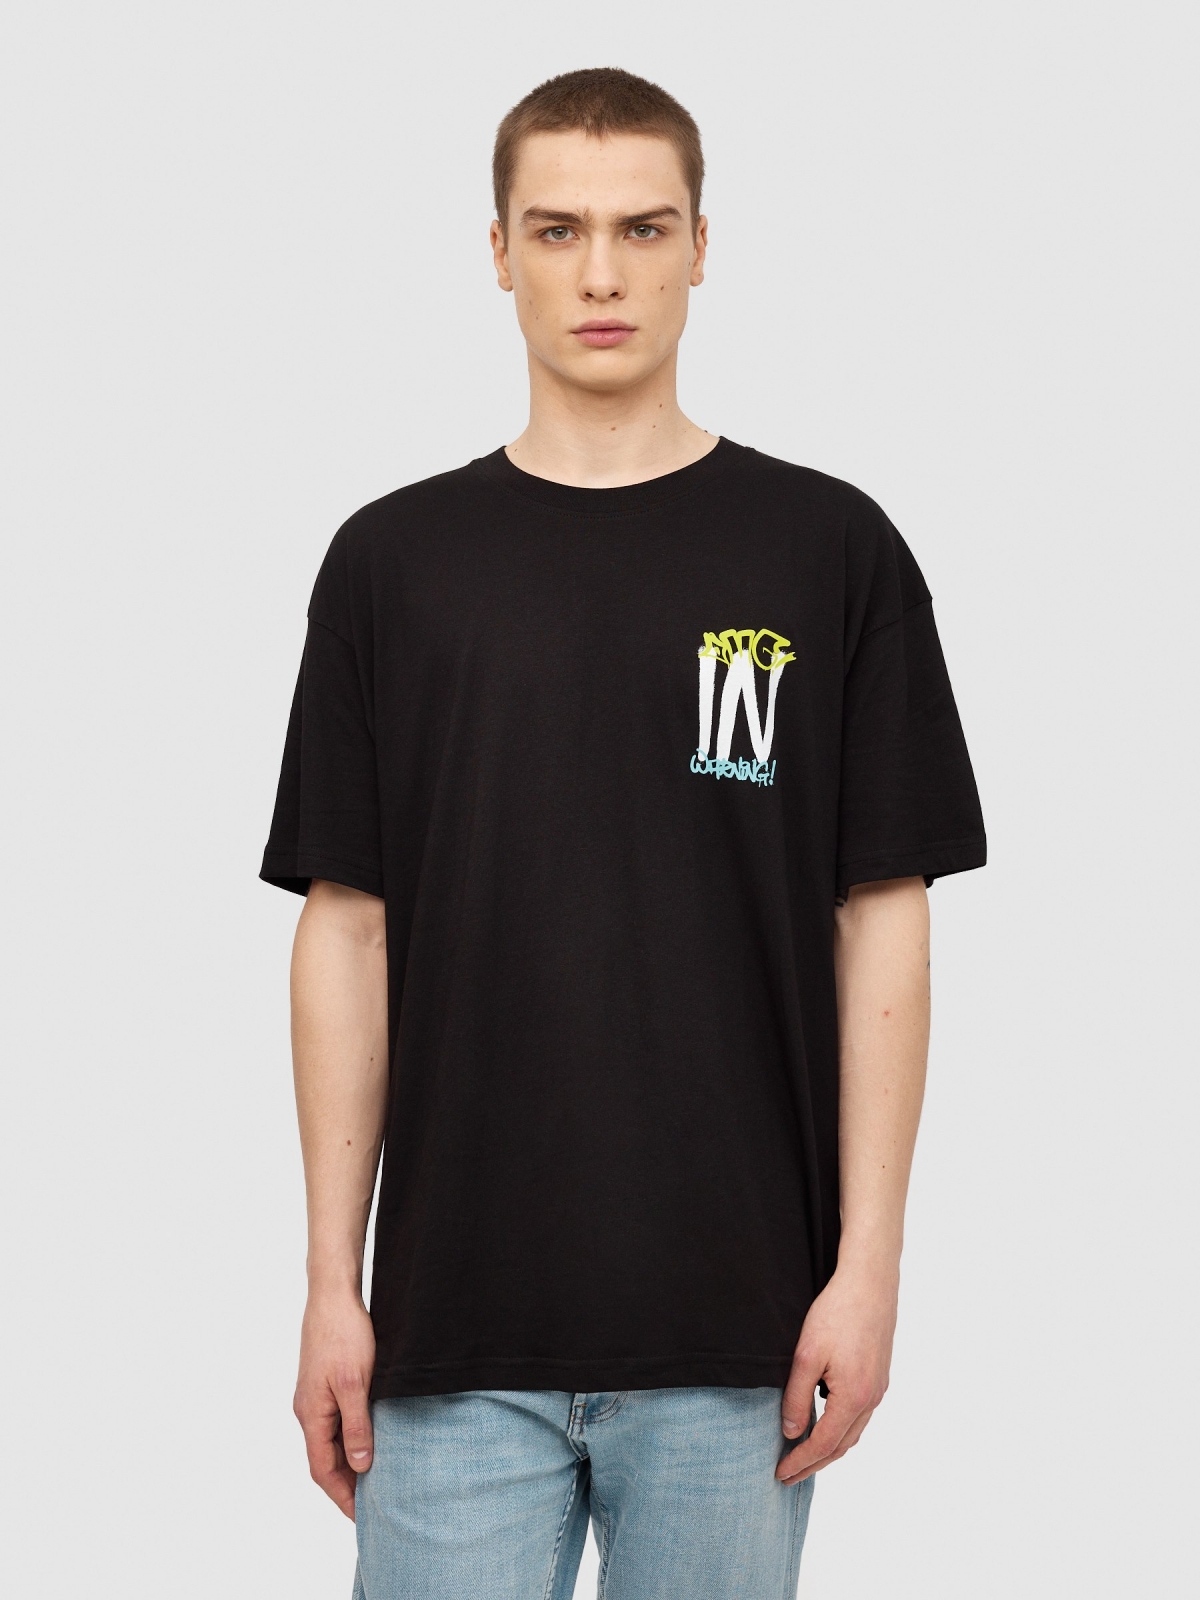 T-shirt com logótipo de graffiti preto vista meia frontal